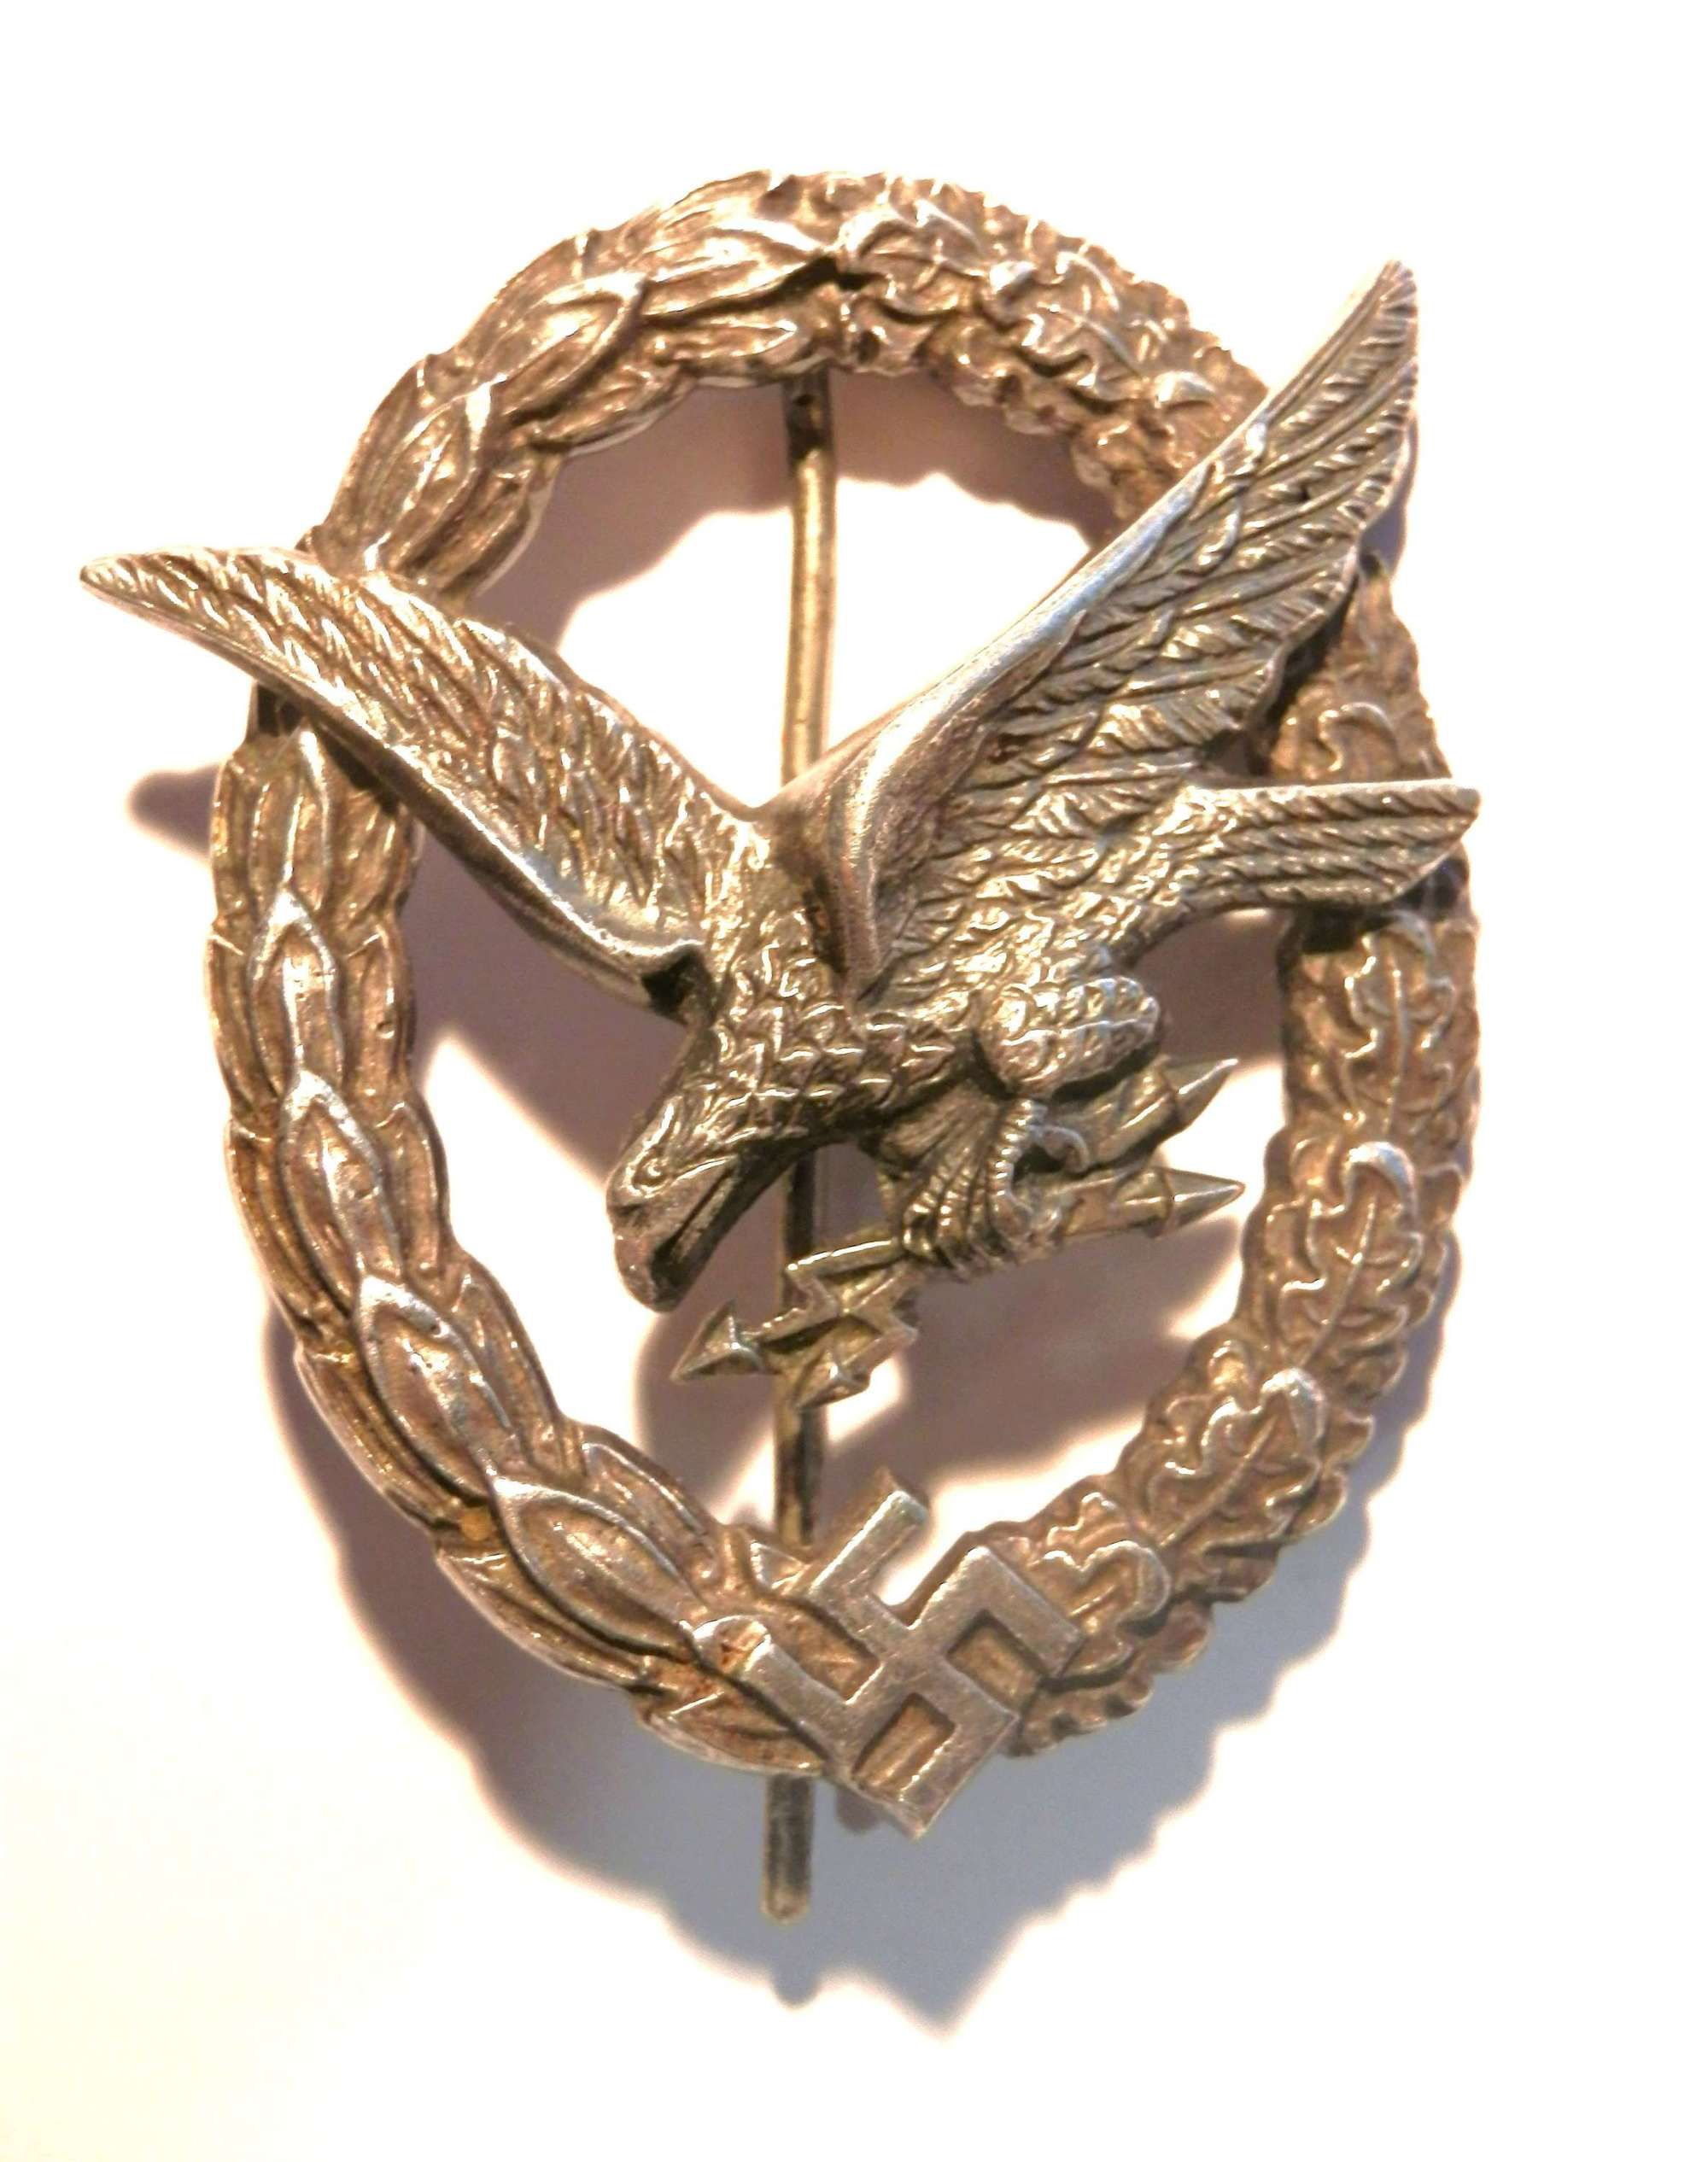 Luftwaffe Radio Operator/Air Gunner's Badge.